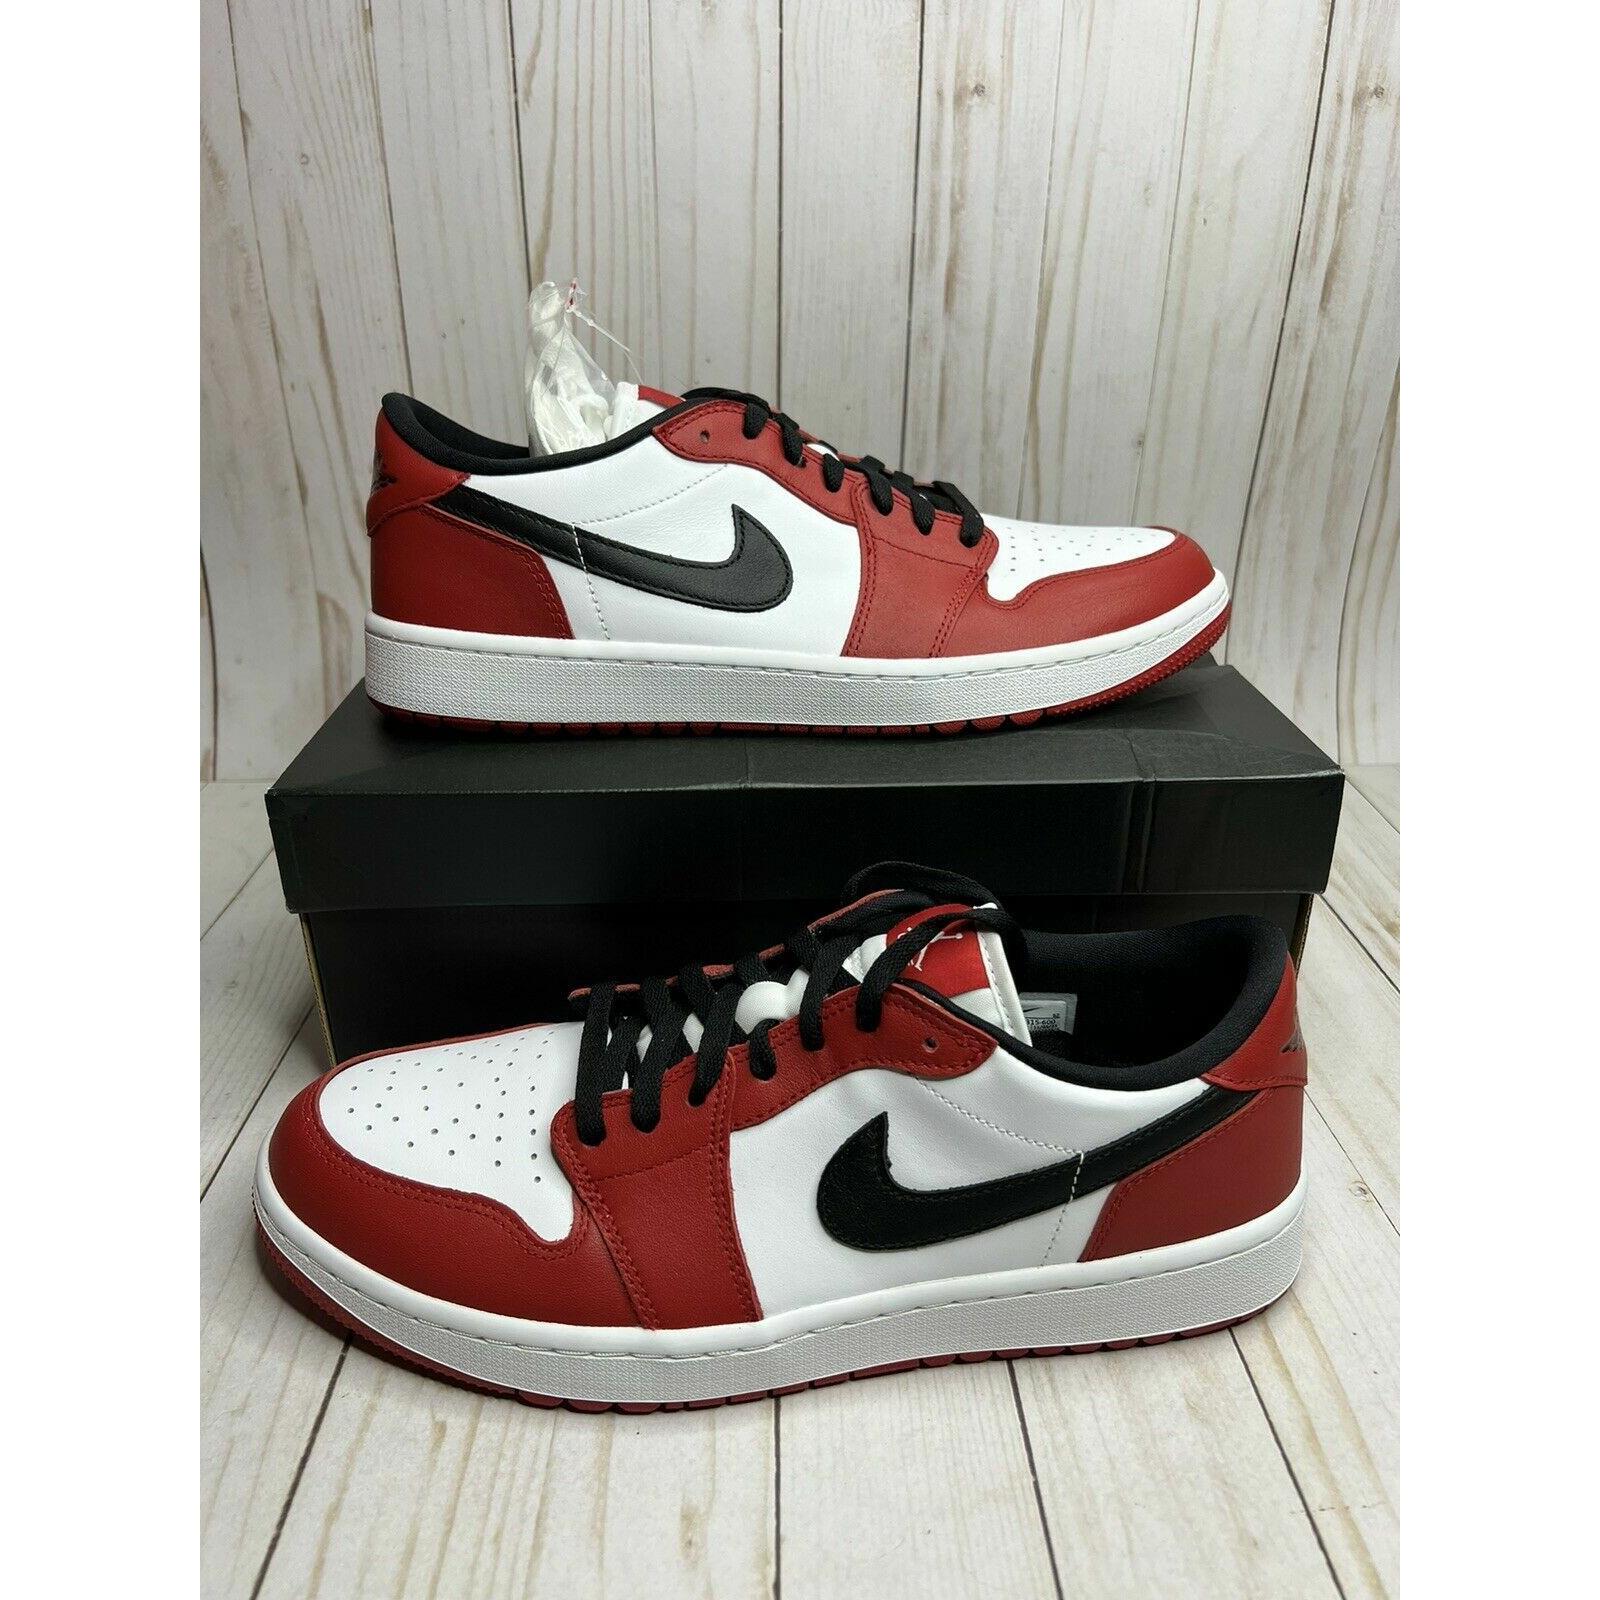 Nike Air Jordan 1 Low Golf Chicago Mens Size 13 Red Black White DD9315 600 Rare